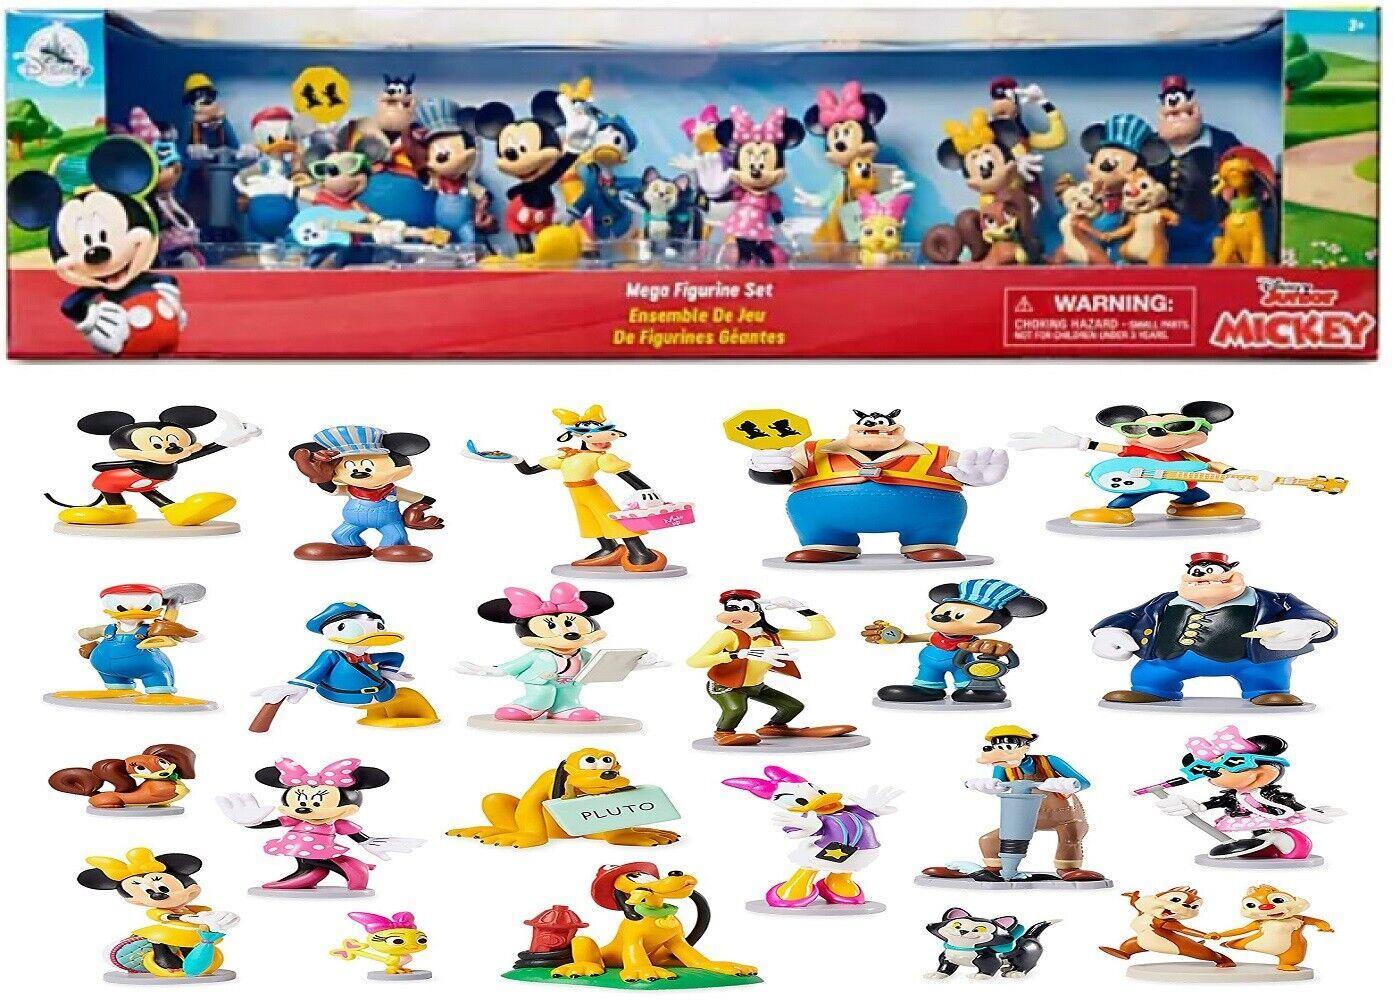 Disney Mickey Mouse and Friends Mega Figurine Set Ages 3+ Minnie Pluto Daisy Fun